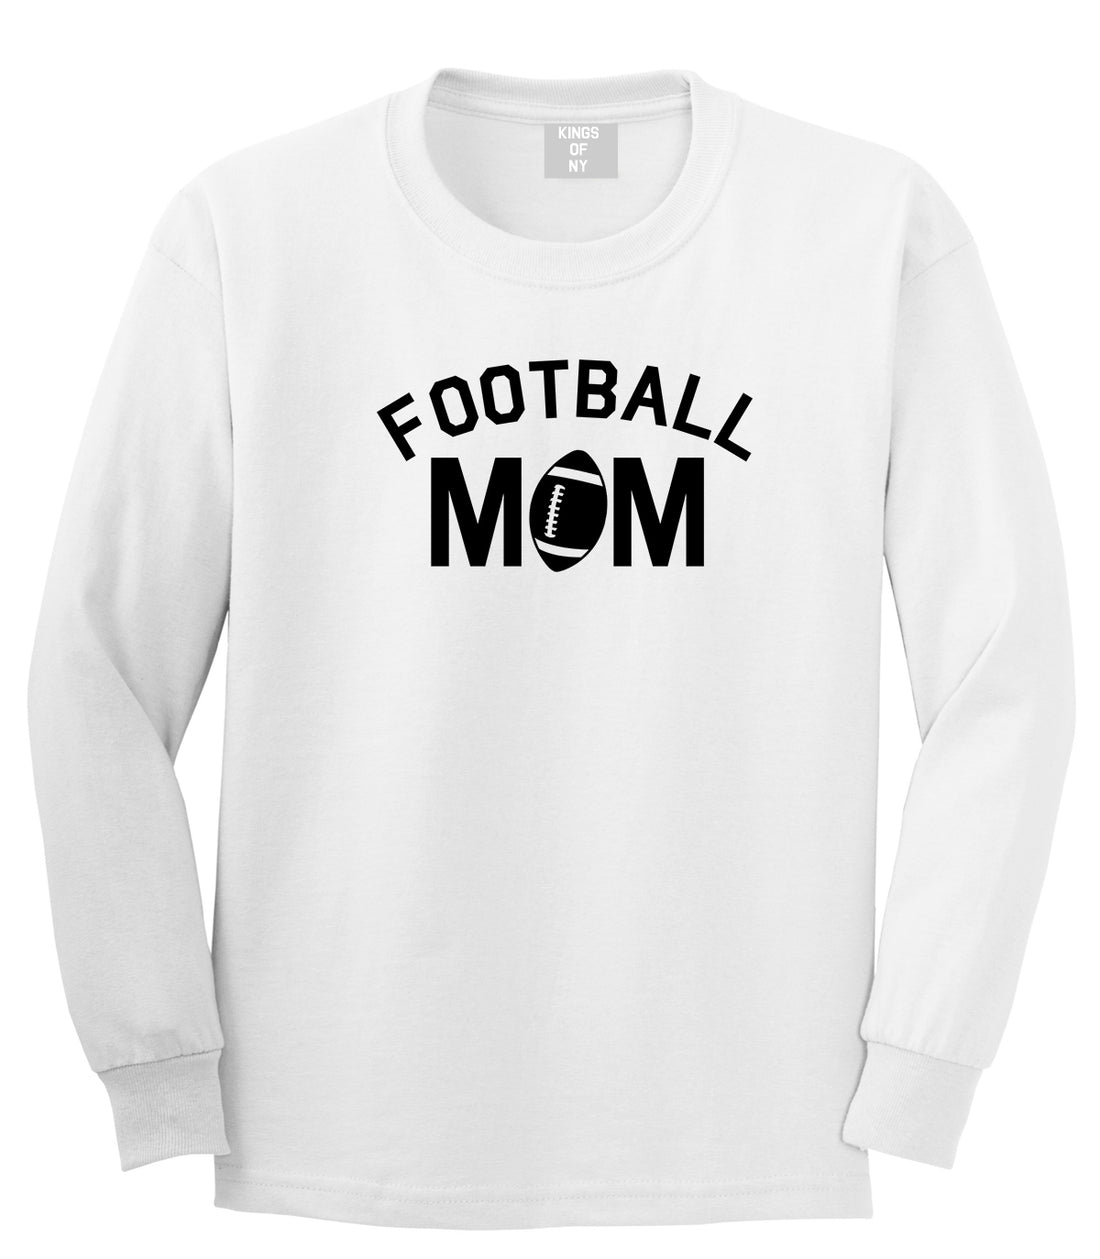 Football Mom Sports Mens White Long Sleeve T-Shirt by KINGS OF NY